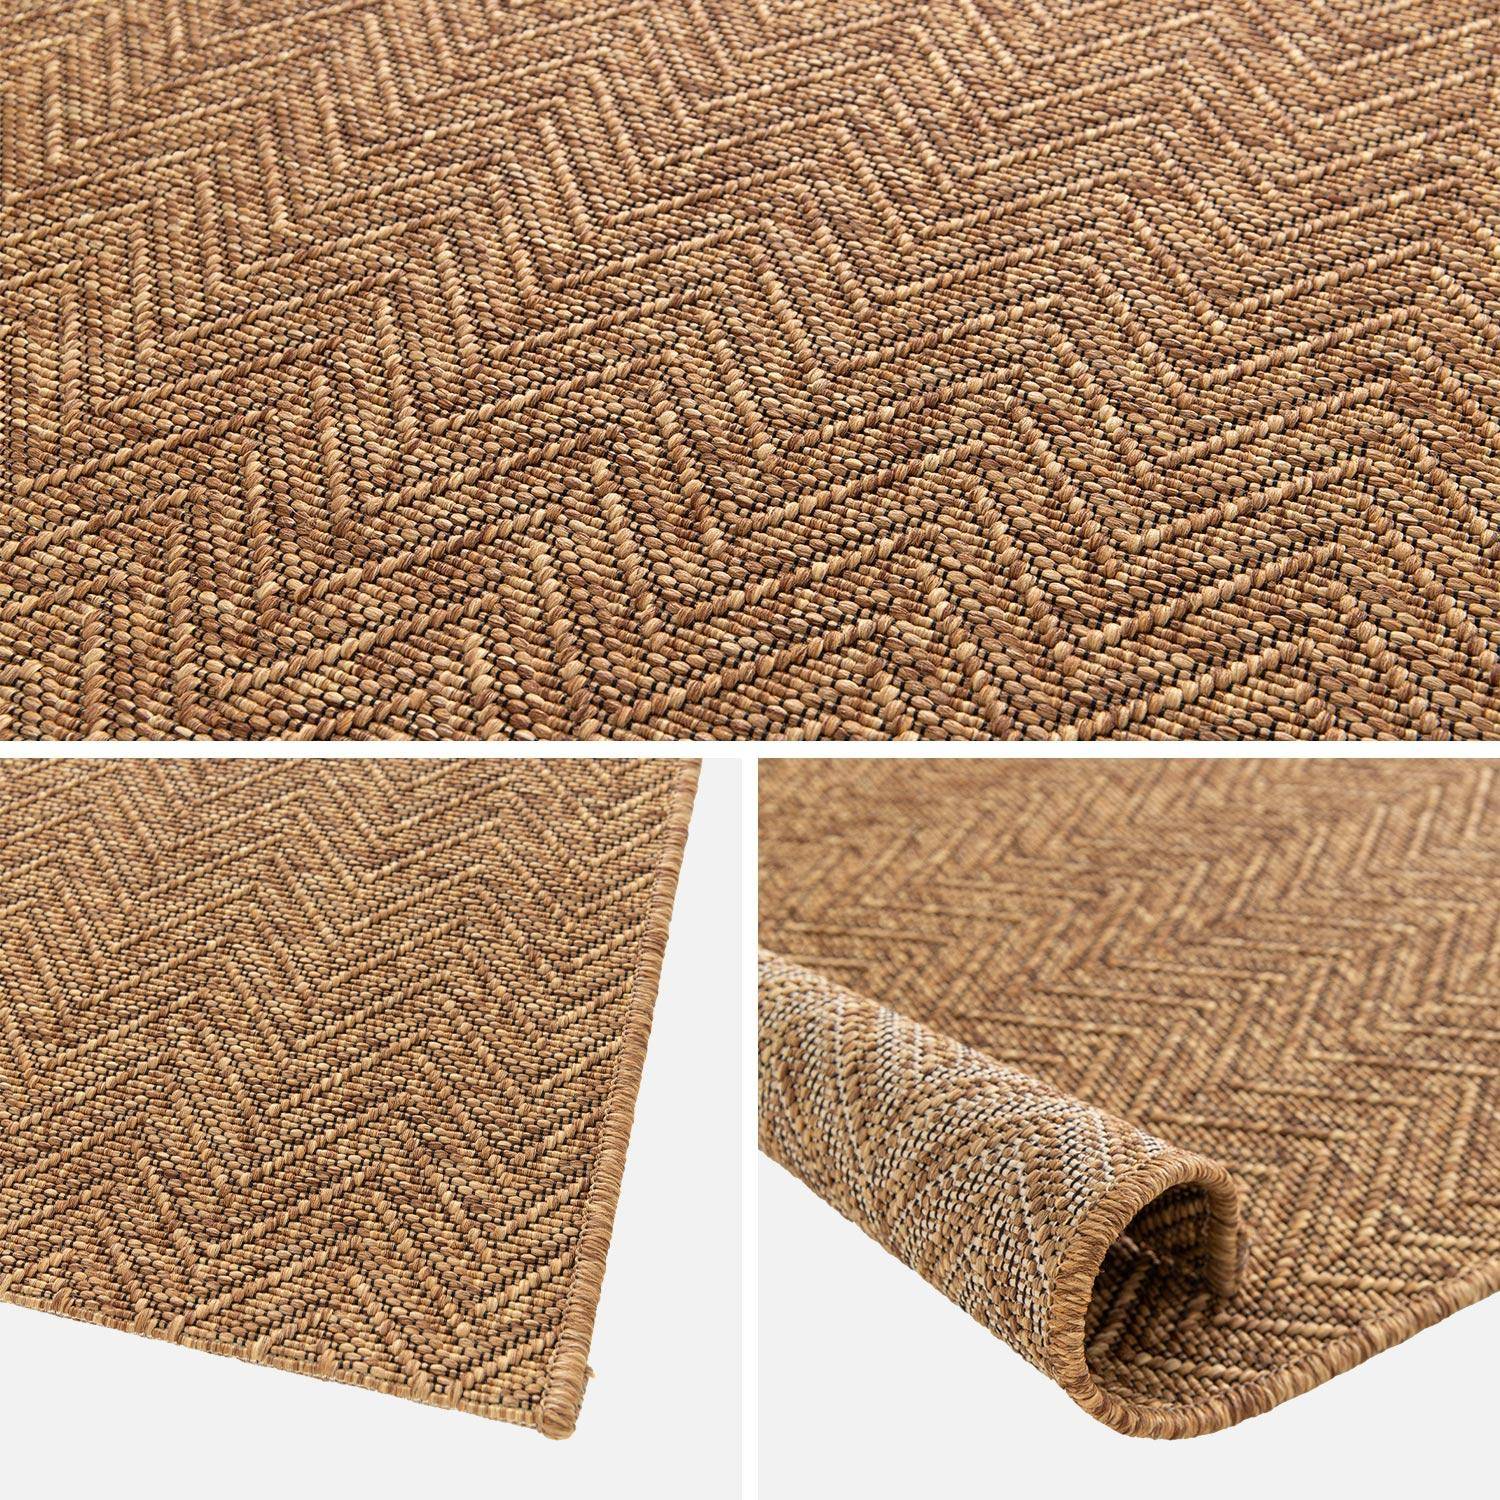 Jute-effect indoor/outdoor carpet in caramel, Oliver, 120 x 170 cm Photo5